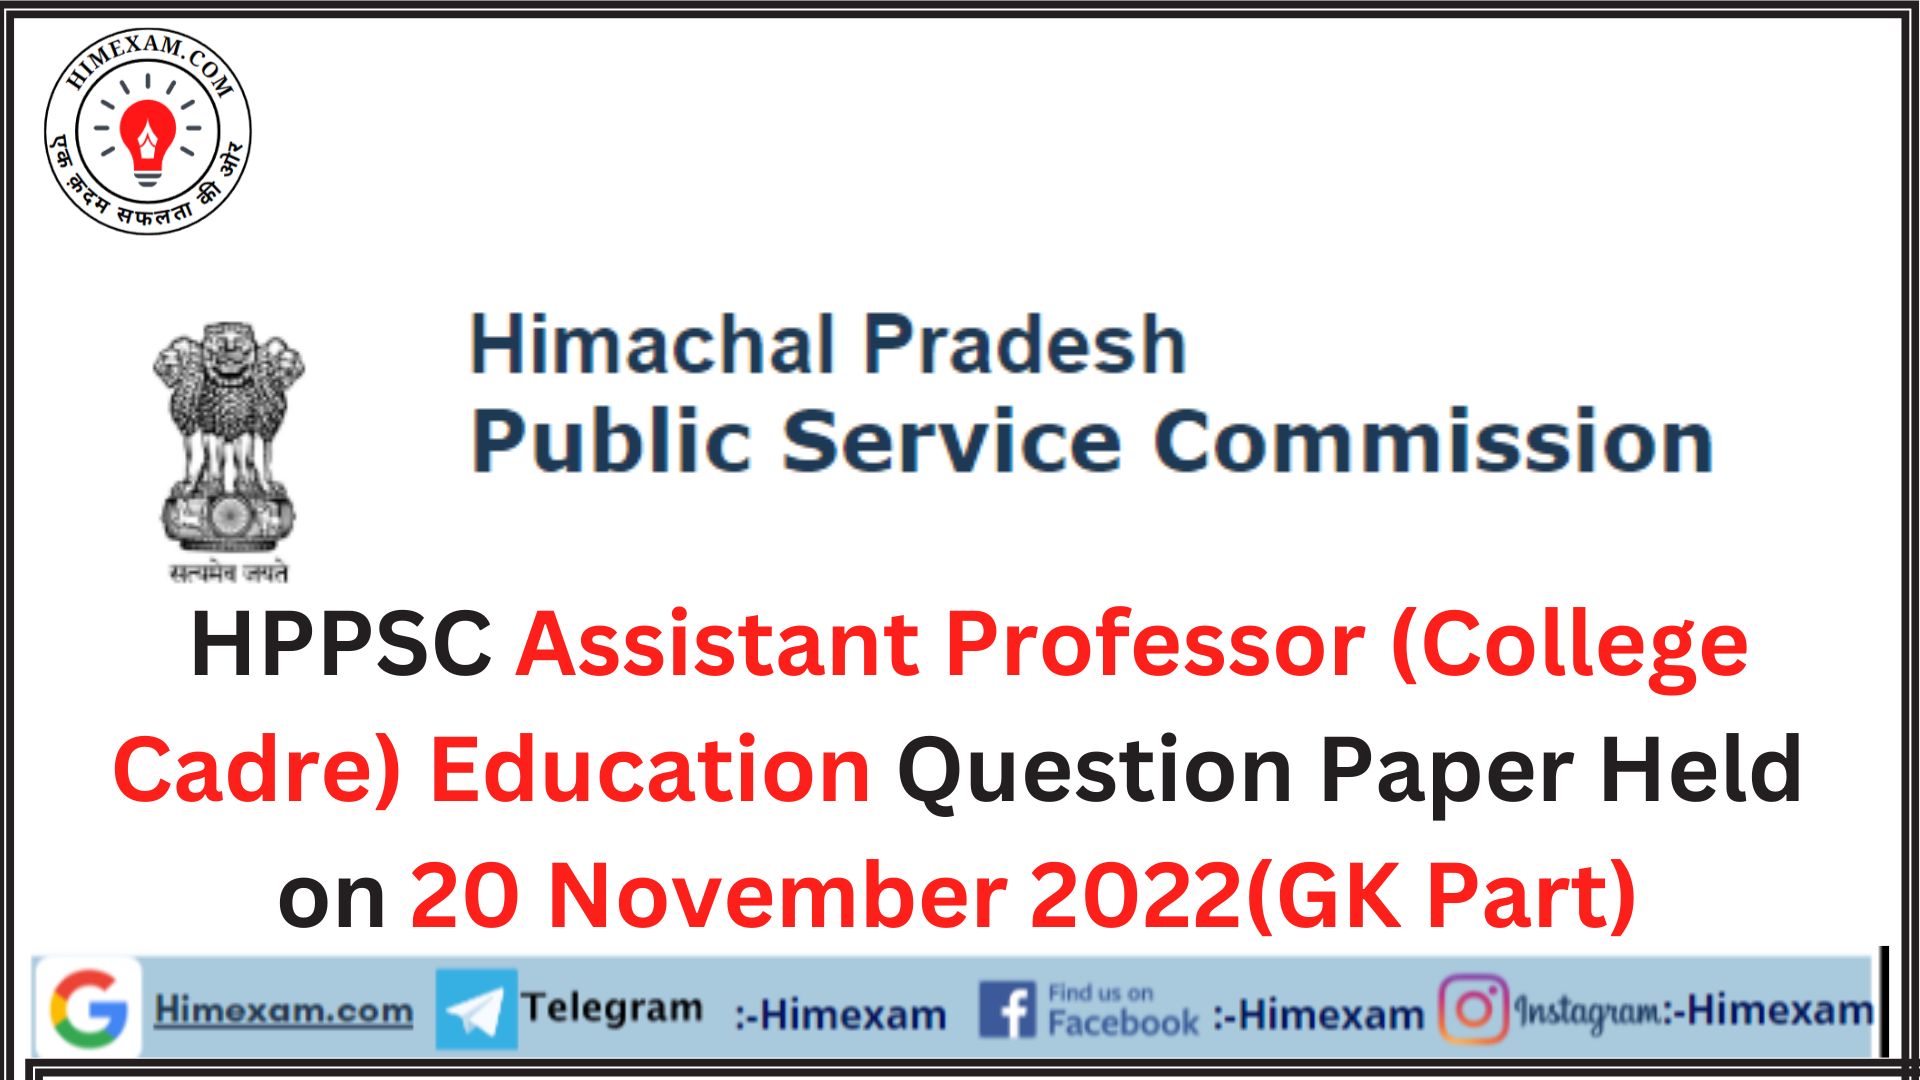 HPPSC Assistant Professor (College Cadre) Education Question Paper Held on 20 November 2022(GK Part)